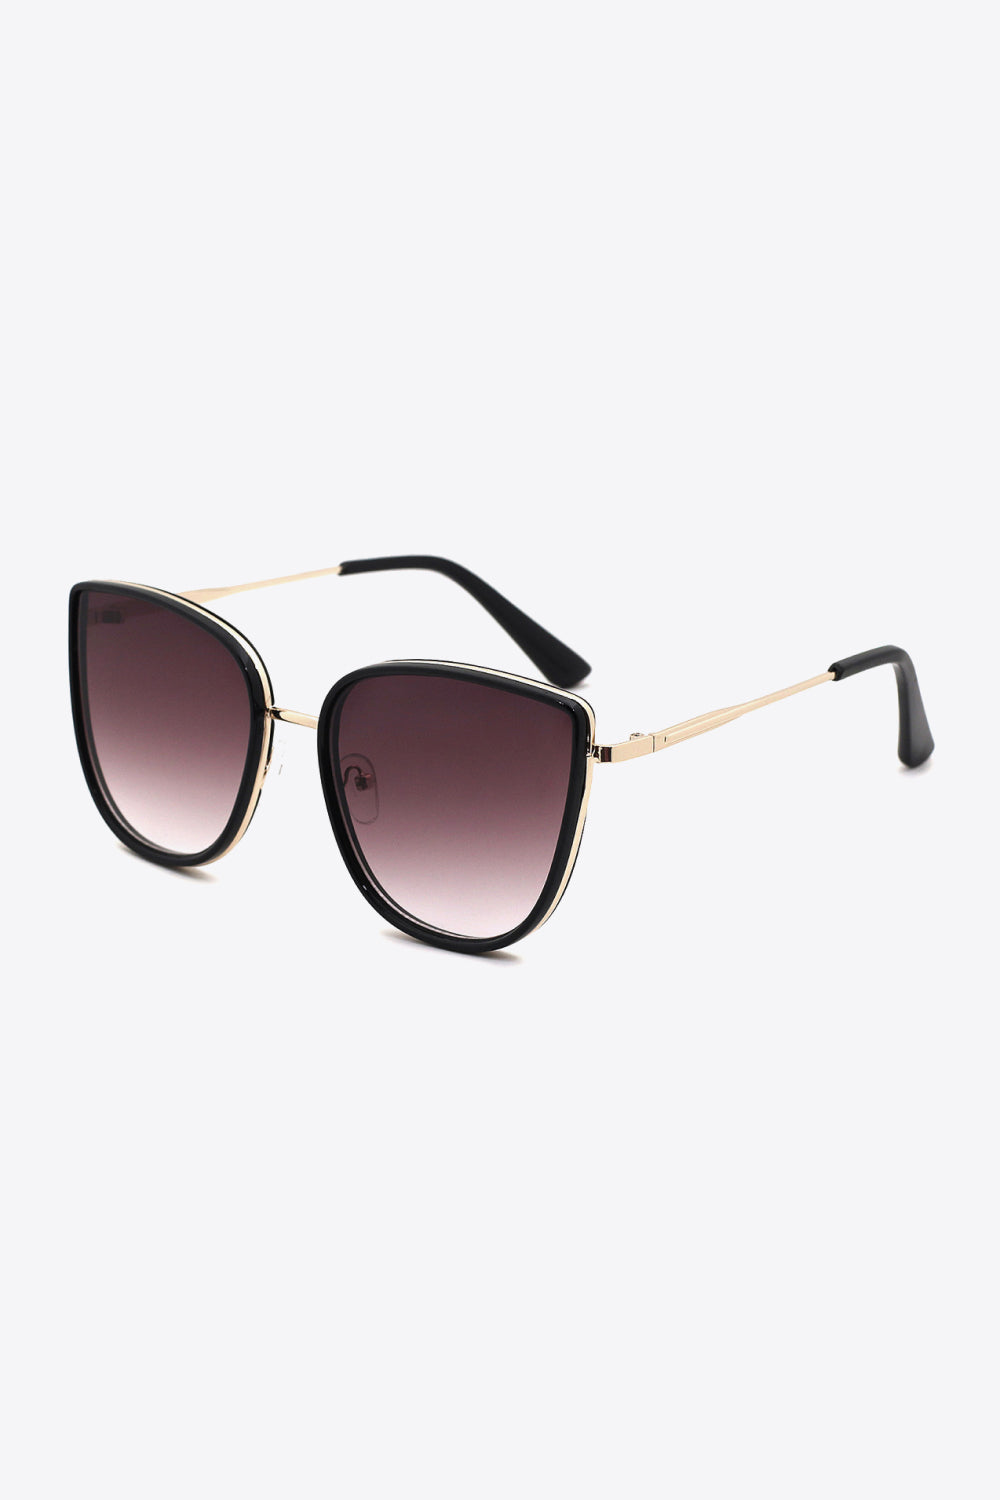 Full Rim Metal-Plastic Hybrid Frame Sunglasses - Sunglasses - FITGGINS